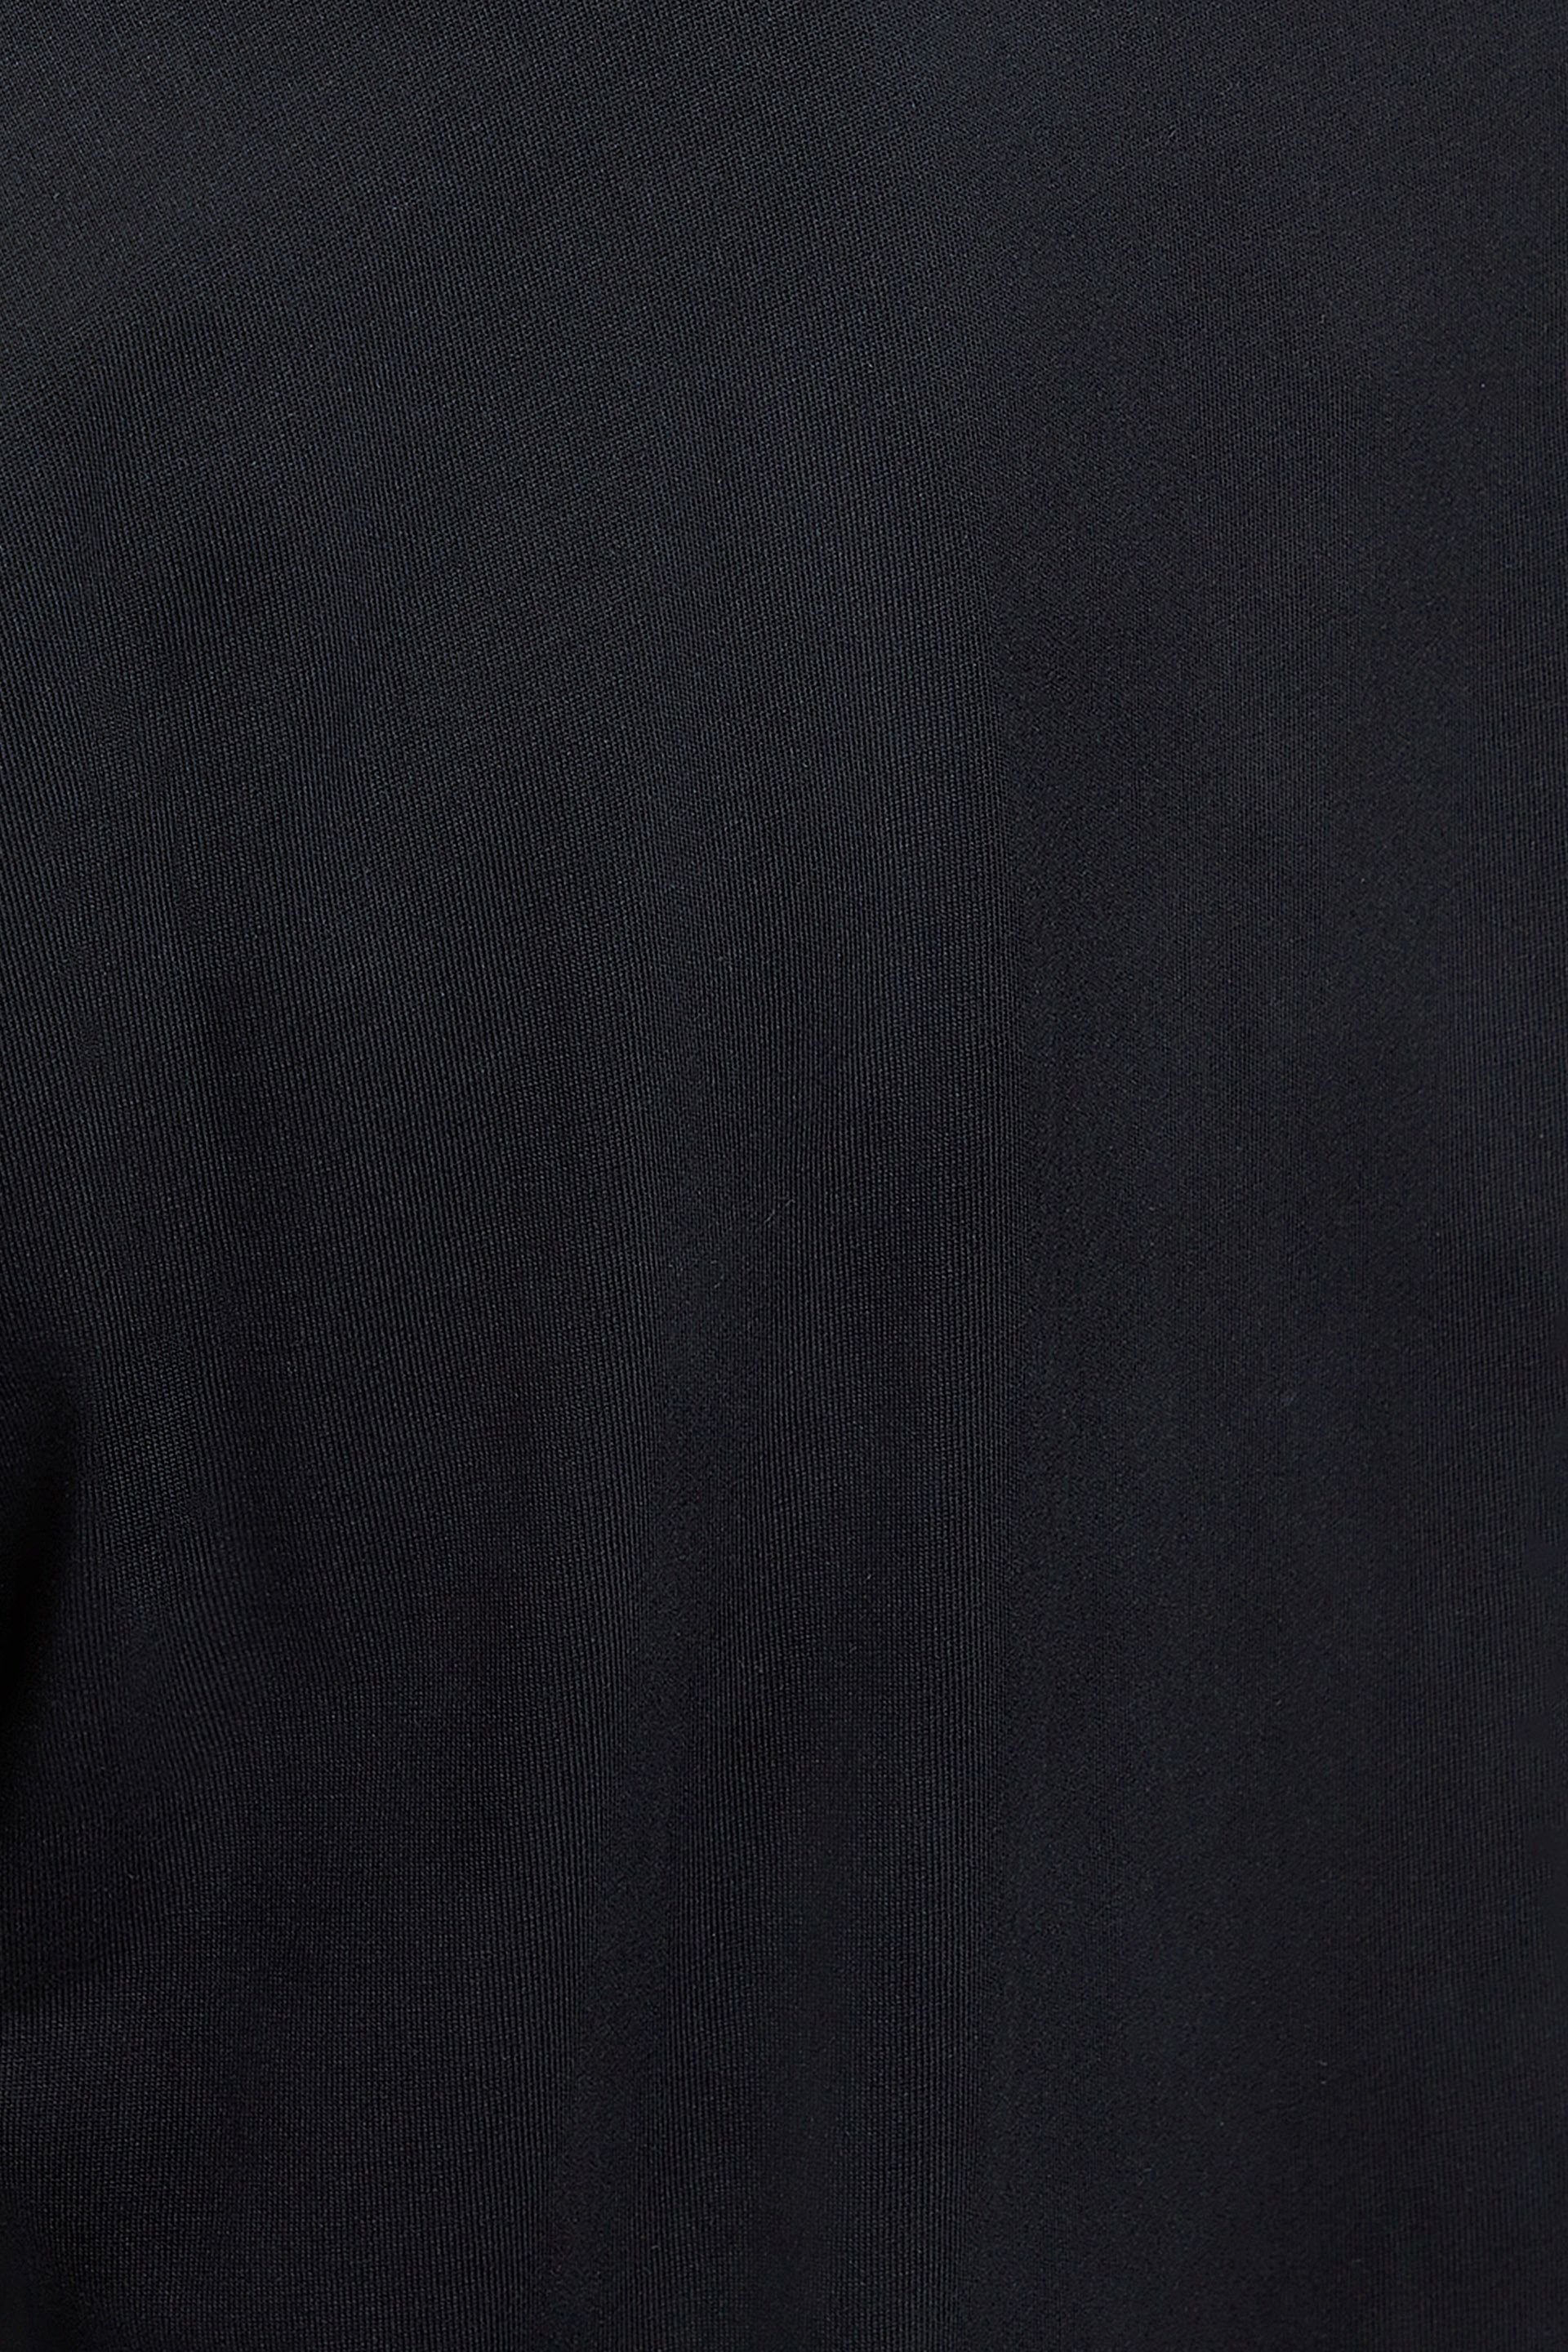 T-Shirt black Esprit